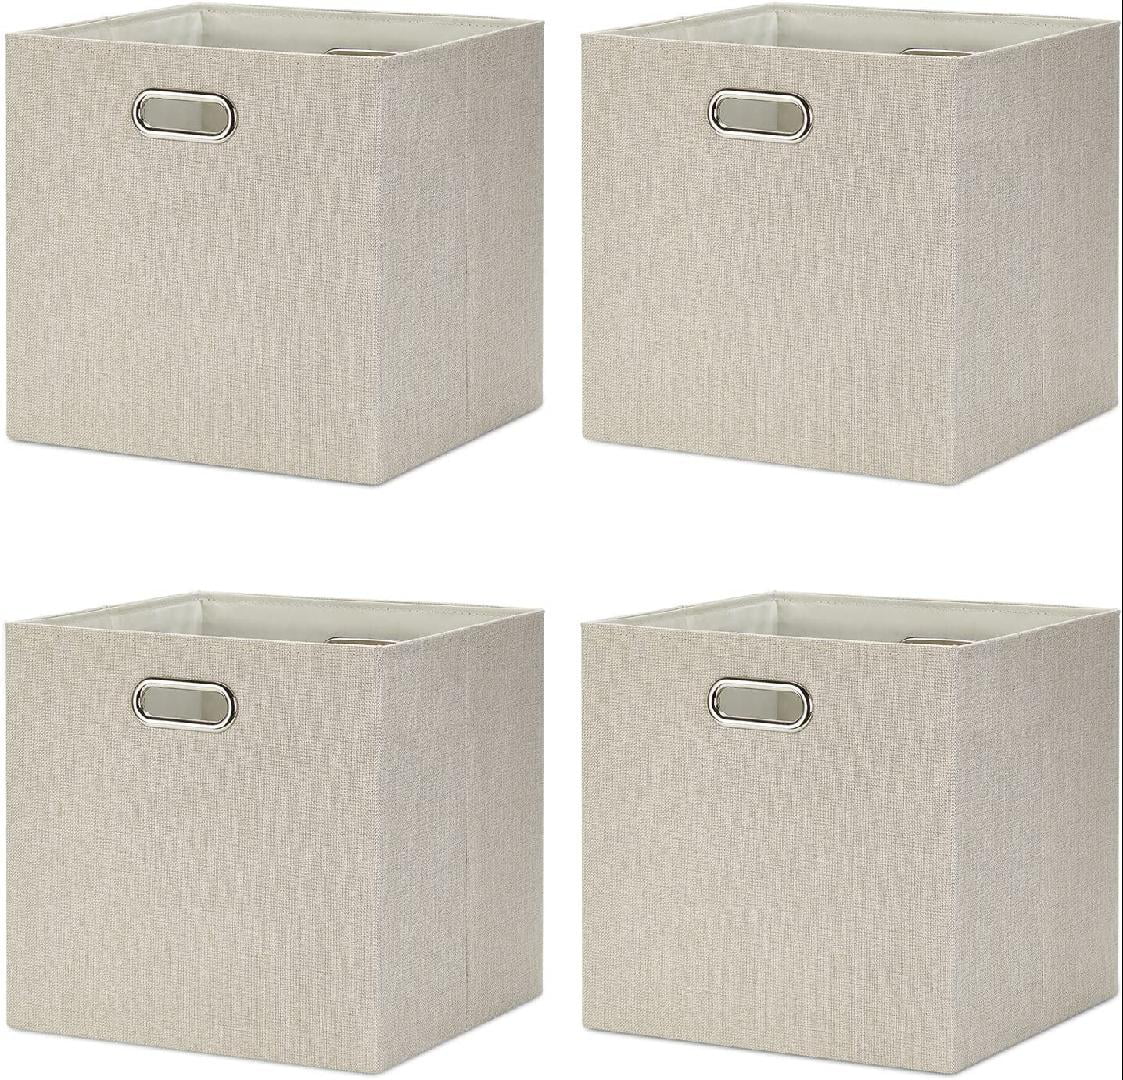 Araierd Storage Cubes Bin, Cloth Bins for Organizing with Handle 4 Pack  Cubby Cube Storage Organizing Bins 12x12 Storage Bins for Cube Fabric Bins  for